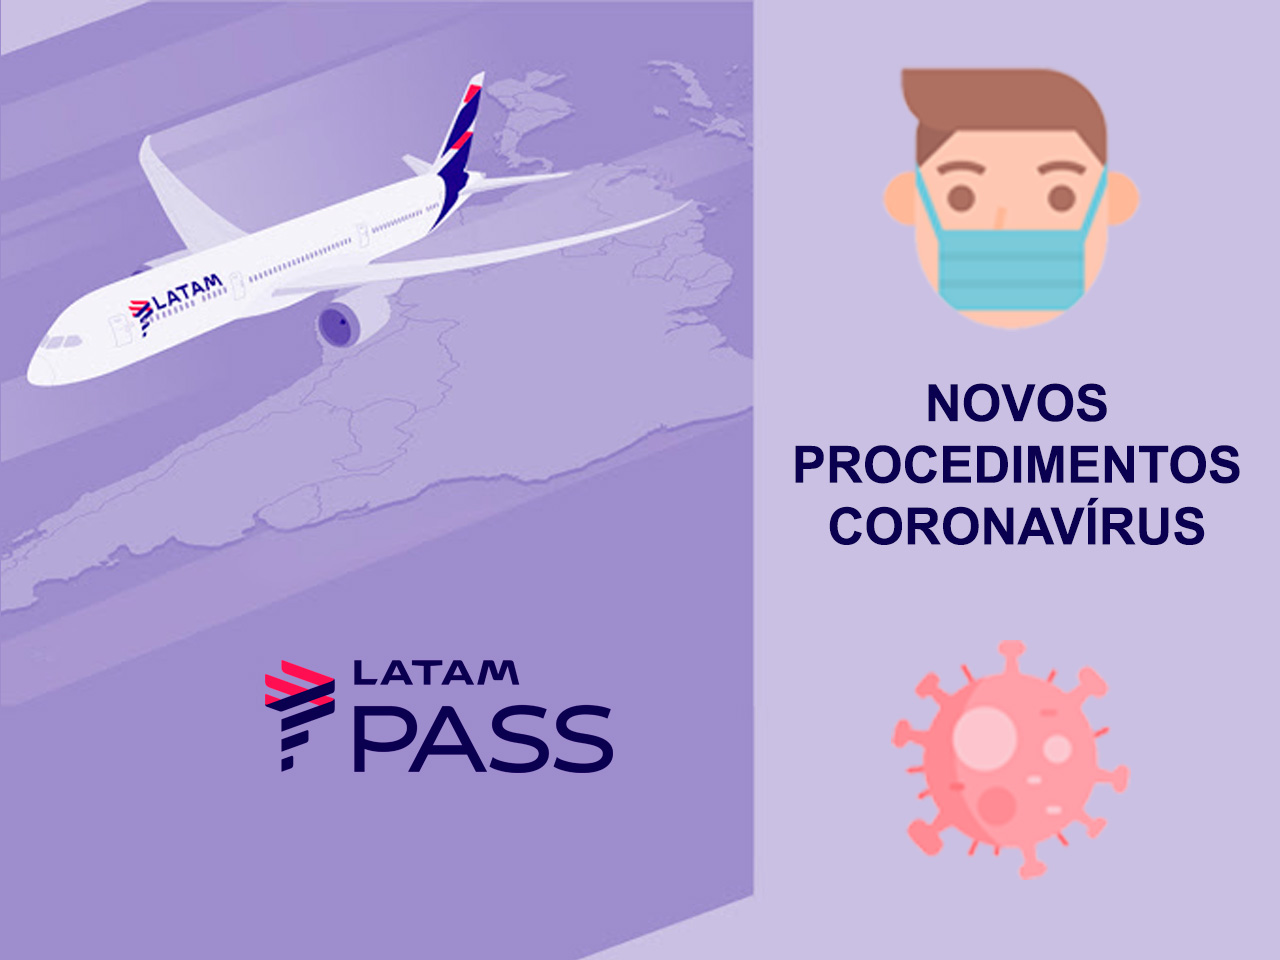 Novos procedimentos Latam Pass para o coronavírus